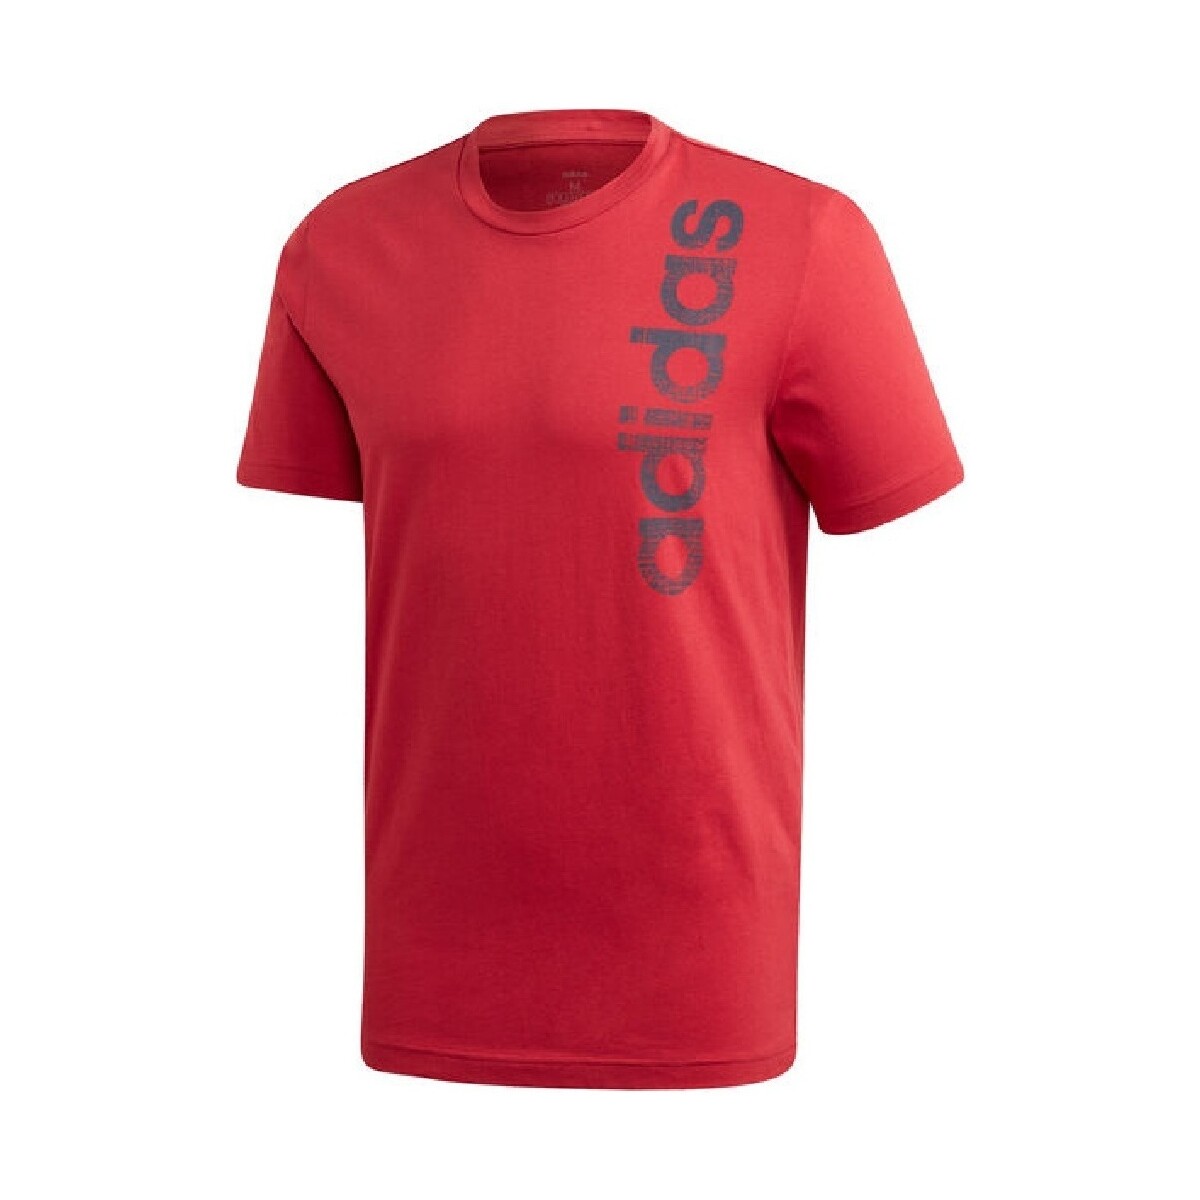 Kleidung Herren T-Shirts adidas Originals FI501 Rot